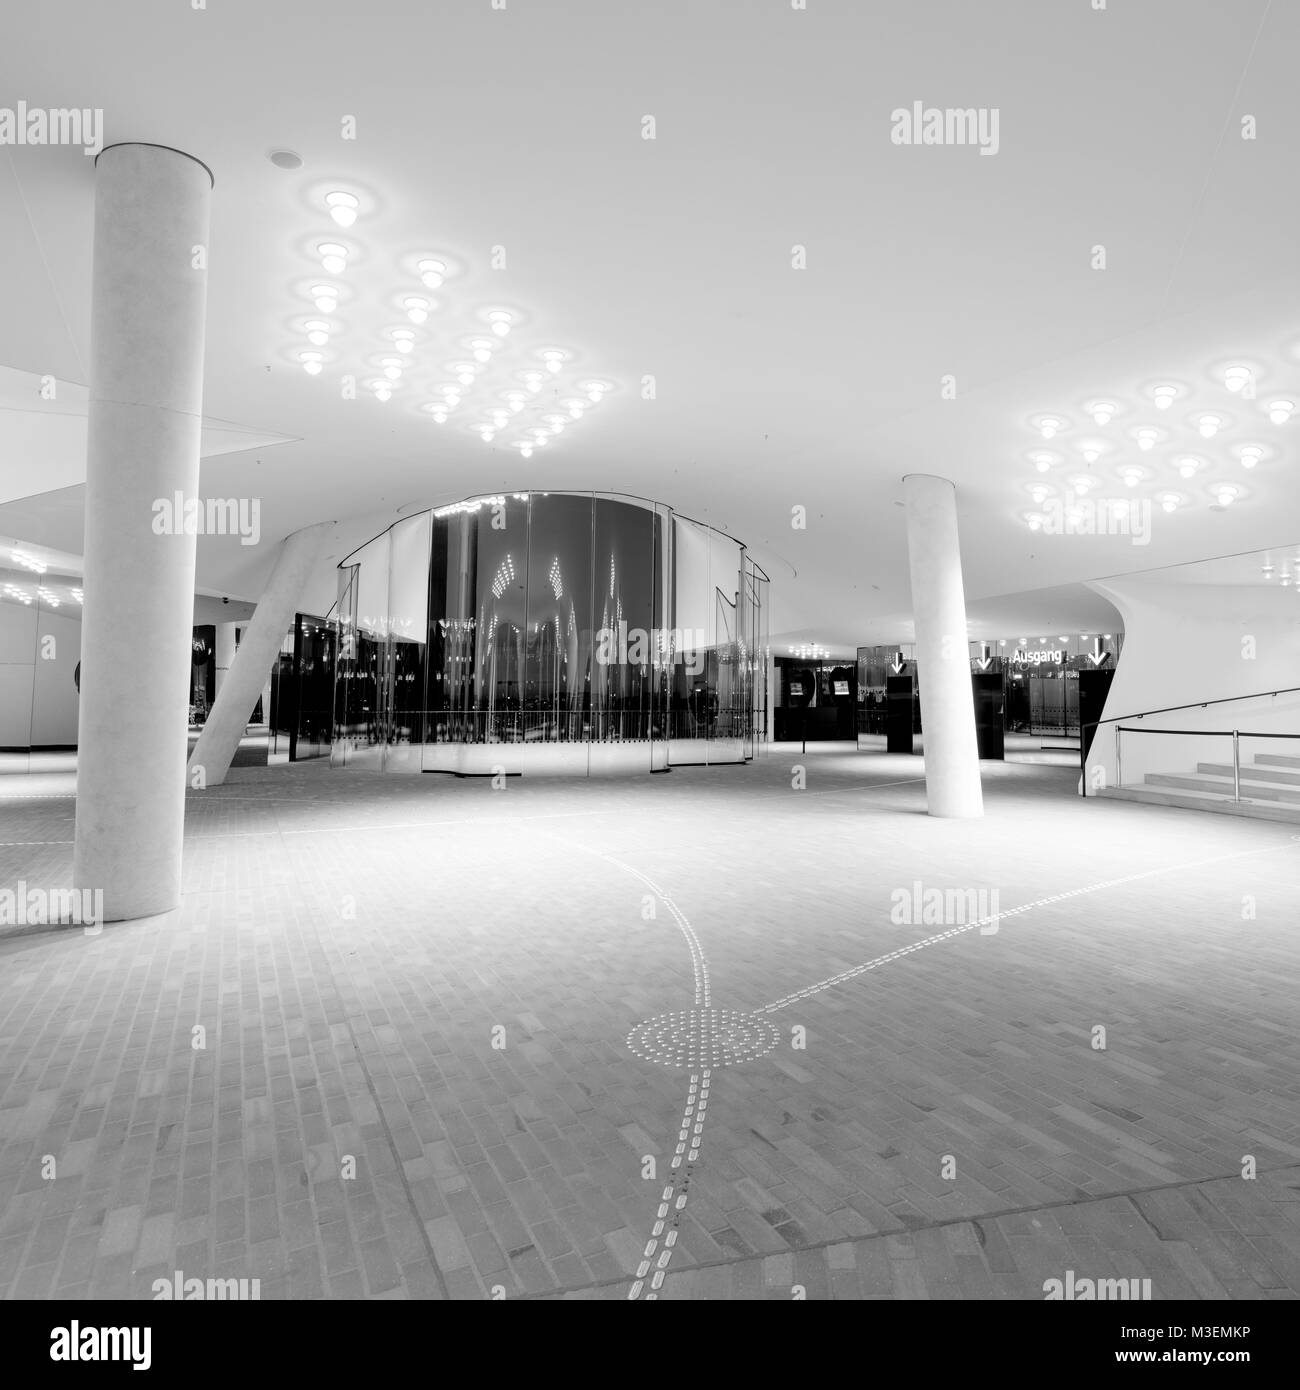 Elbphilharmoni Hamburg Germany taken in 2015 Stock Photo